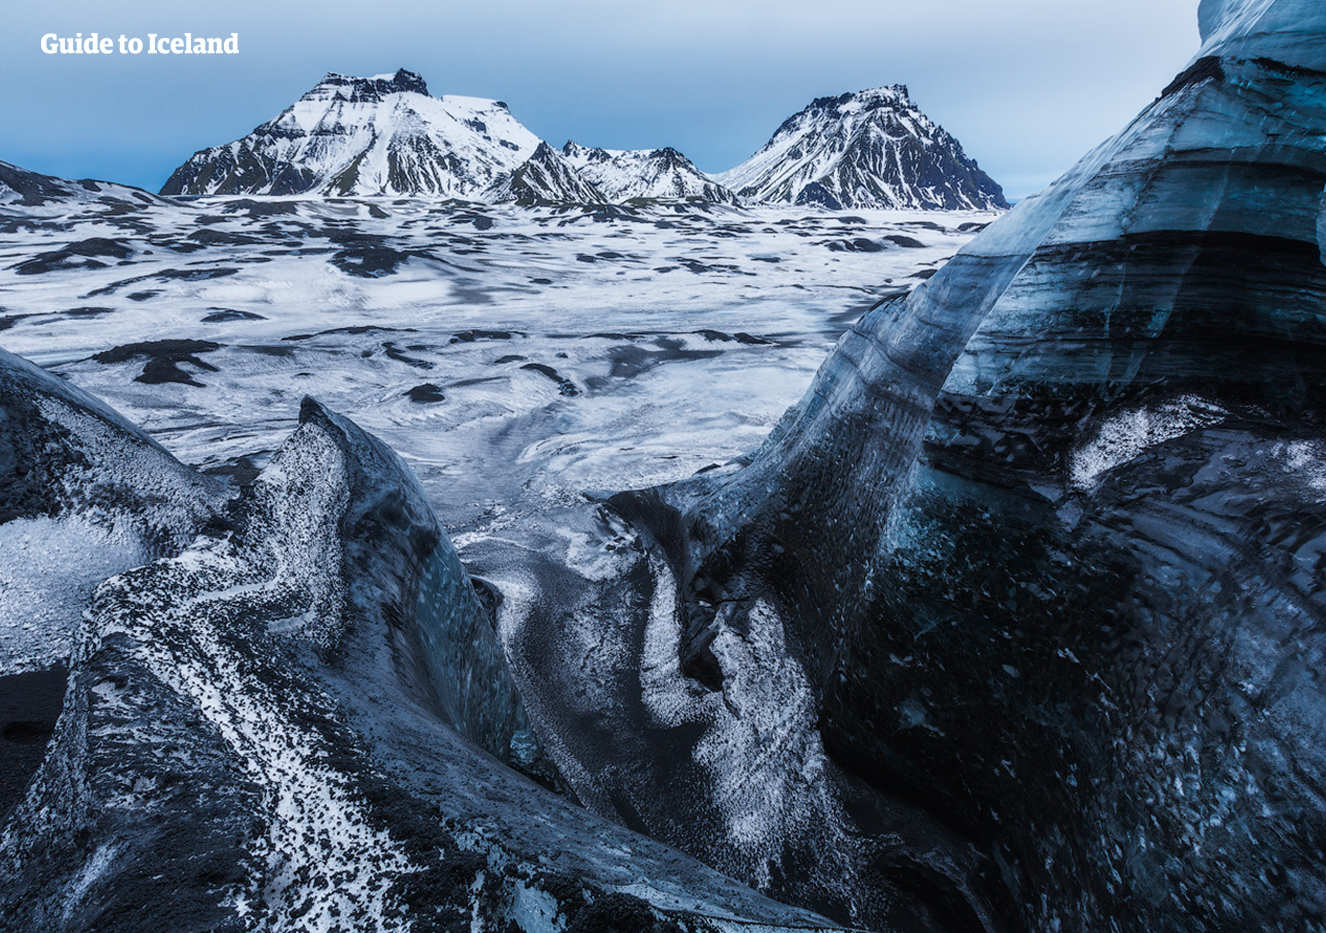 Mýrdalsgjökull's glacier peaks are covered in black ash from past volcanic eruptions.